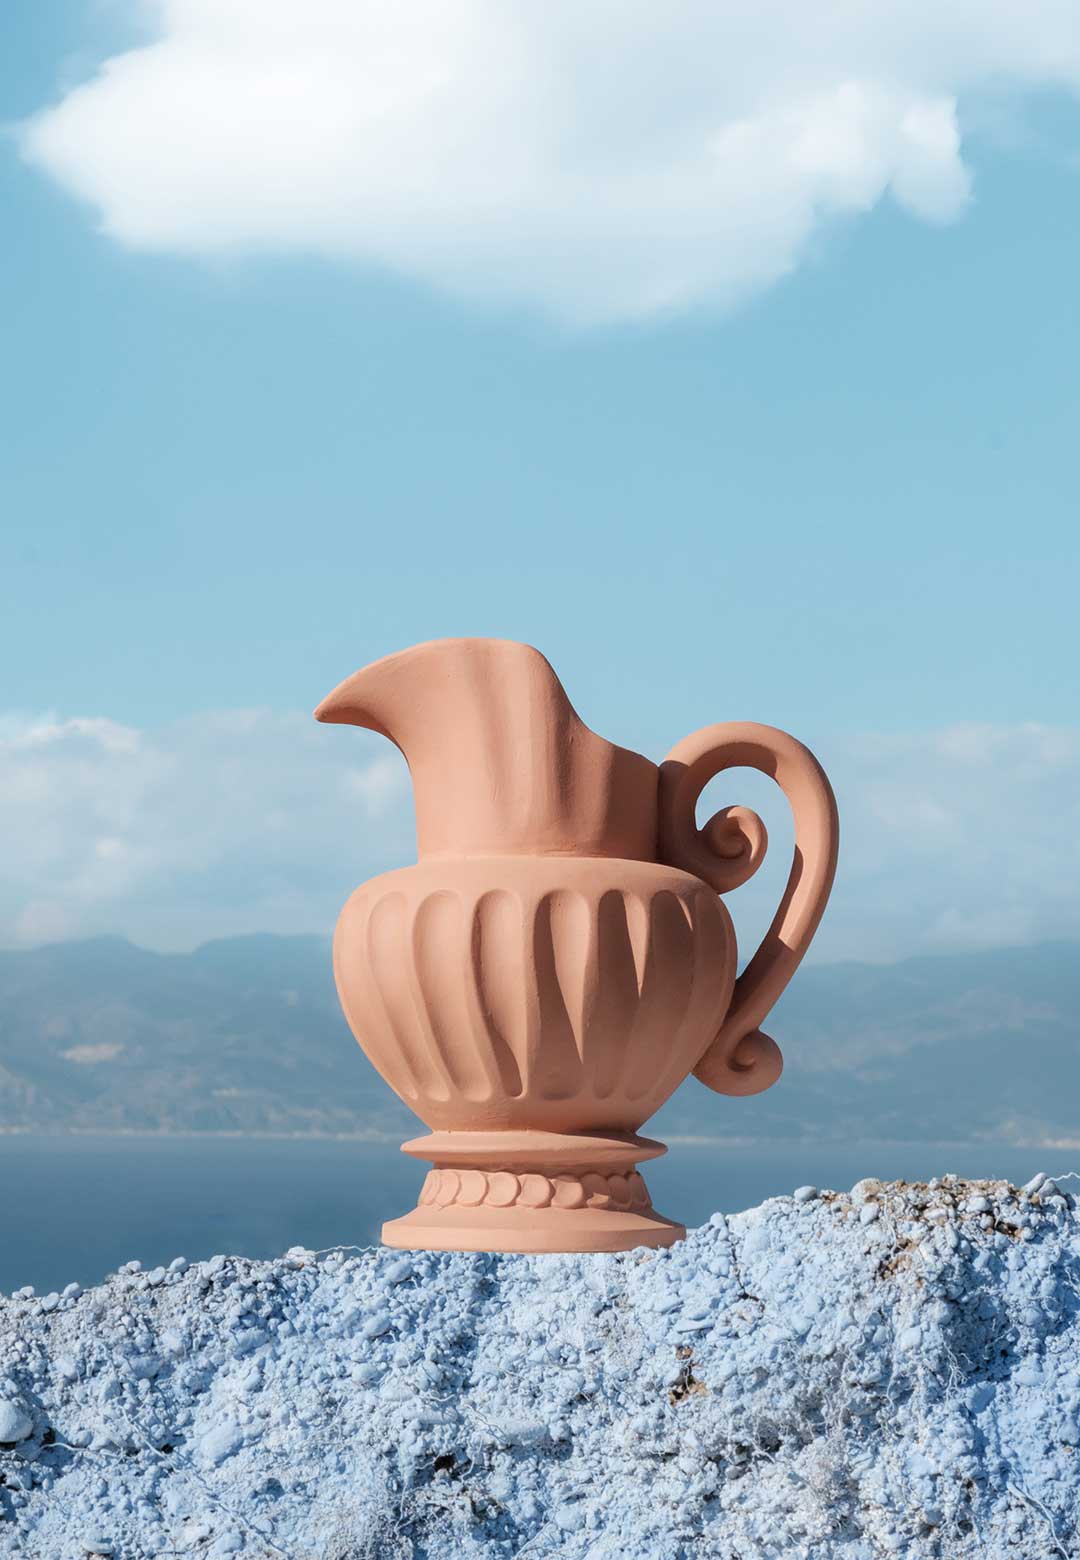 Antonio Aricò adorns terracotta objects with Greek motifs